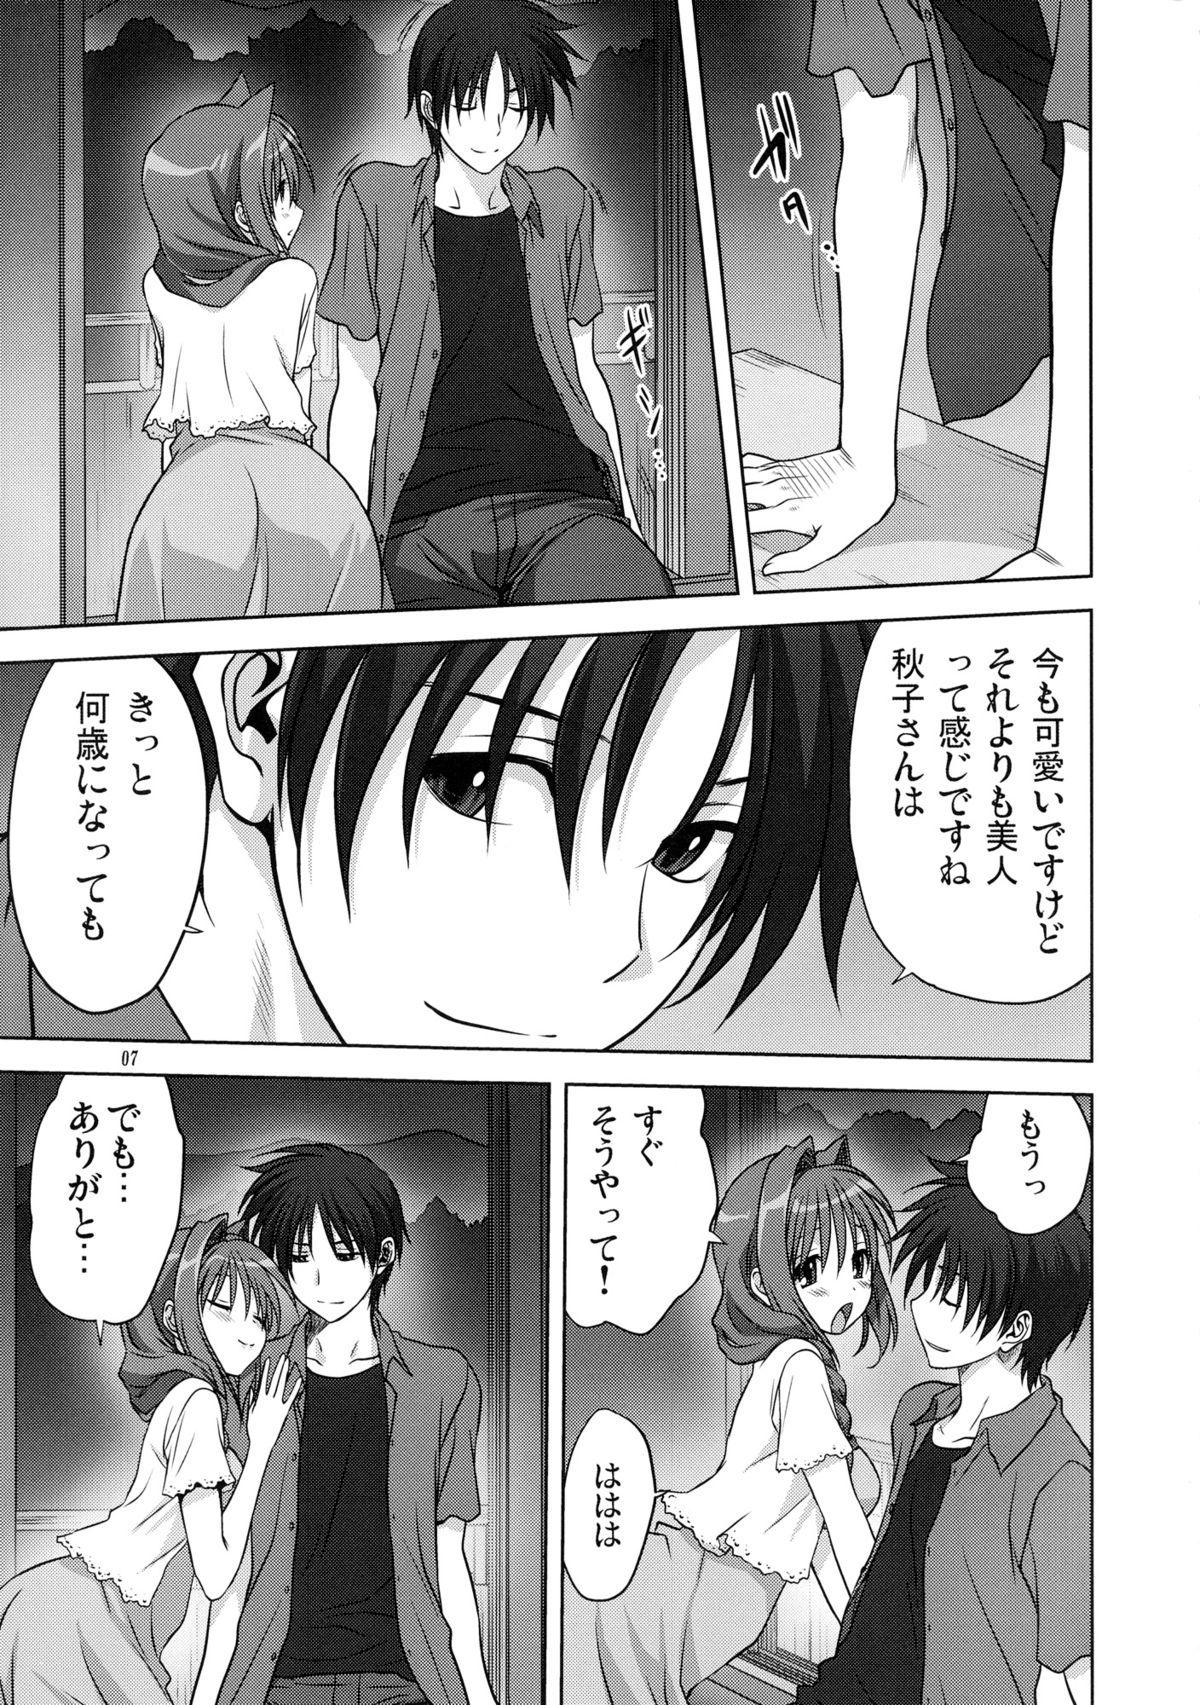 Fuck Akiko-san to Issho 12 - Kanon Student - Page 7